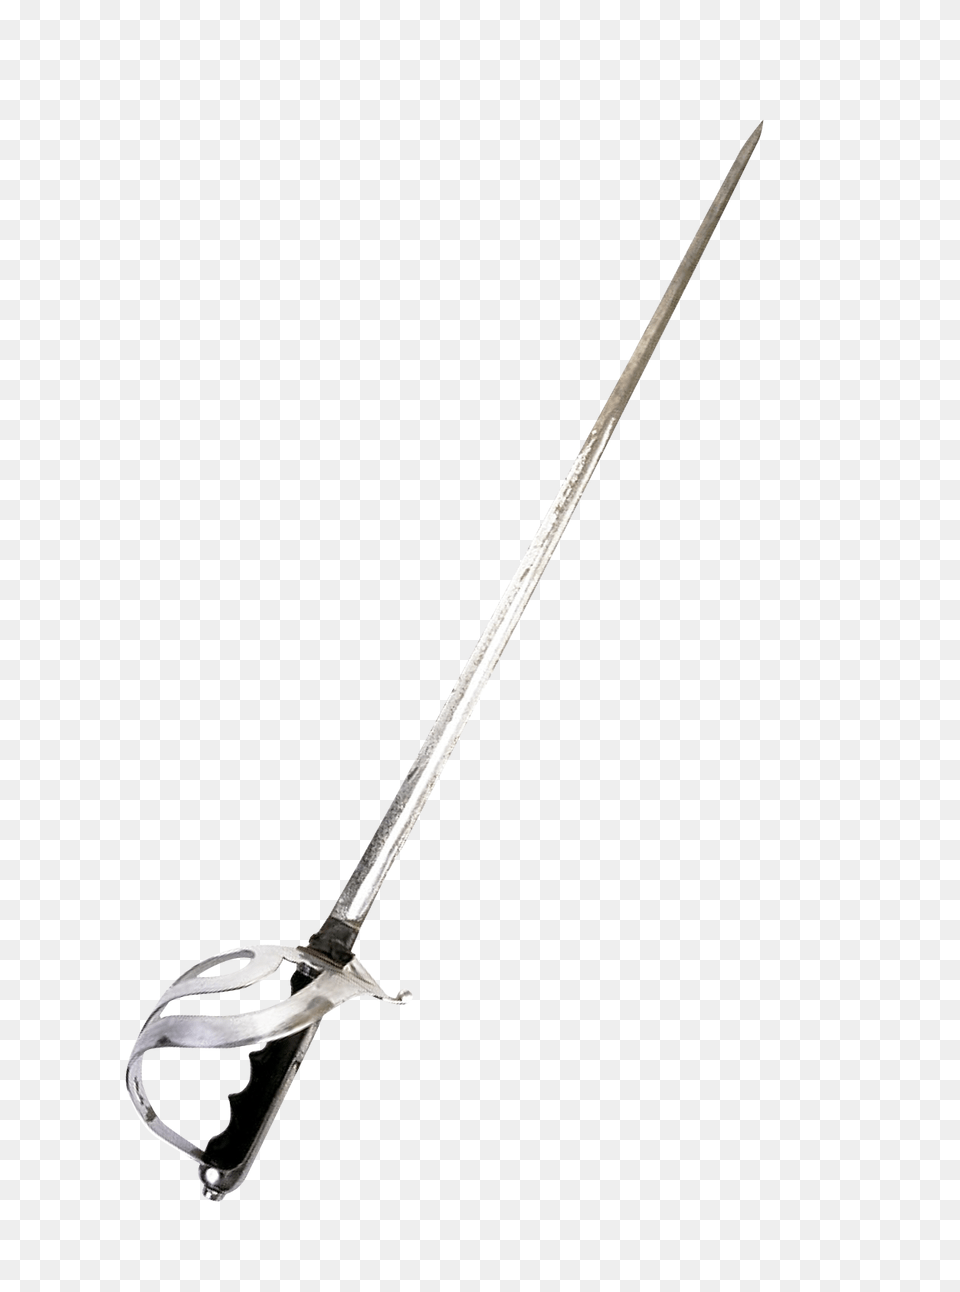 Pngpix Com Sword Transparent Weapon Png Image